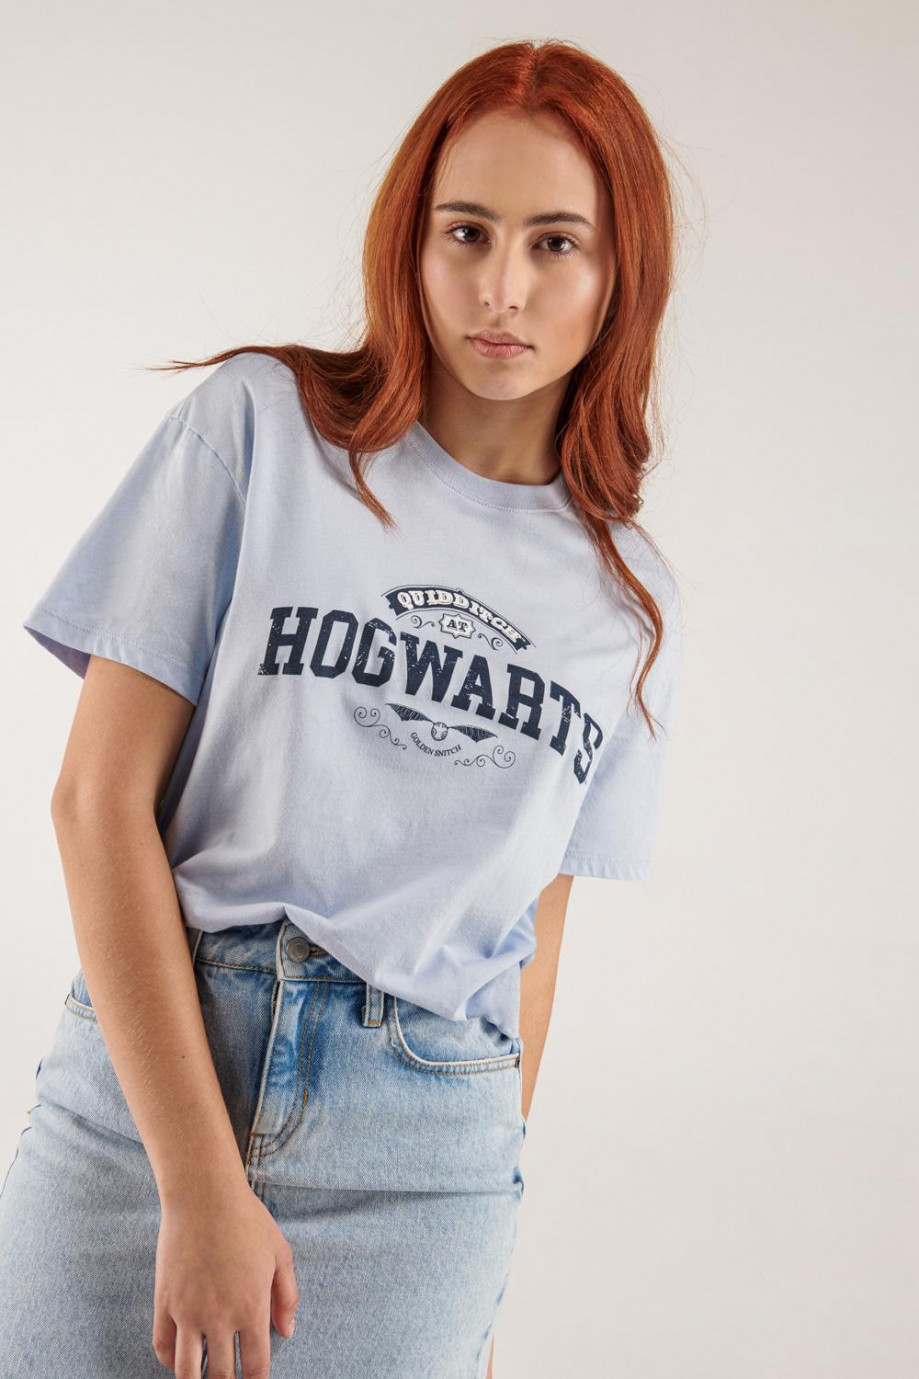 Camiseta manga corta estampado de Harry Potter.